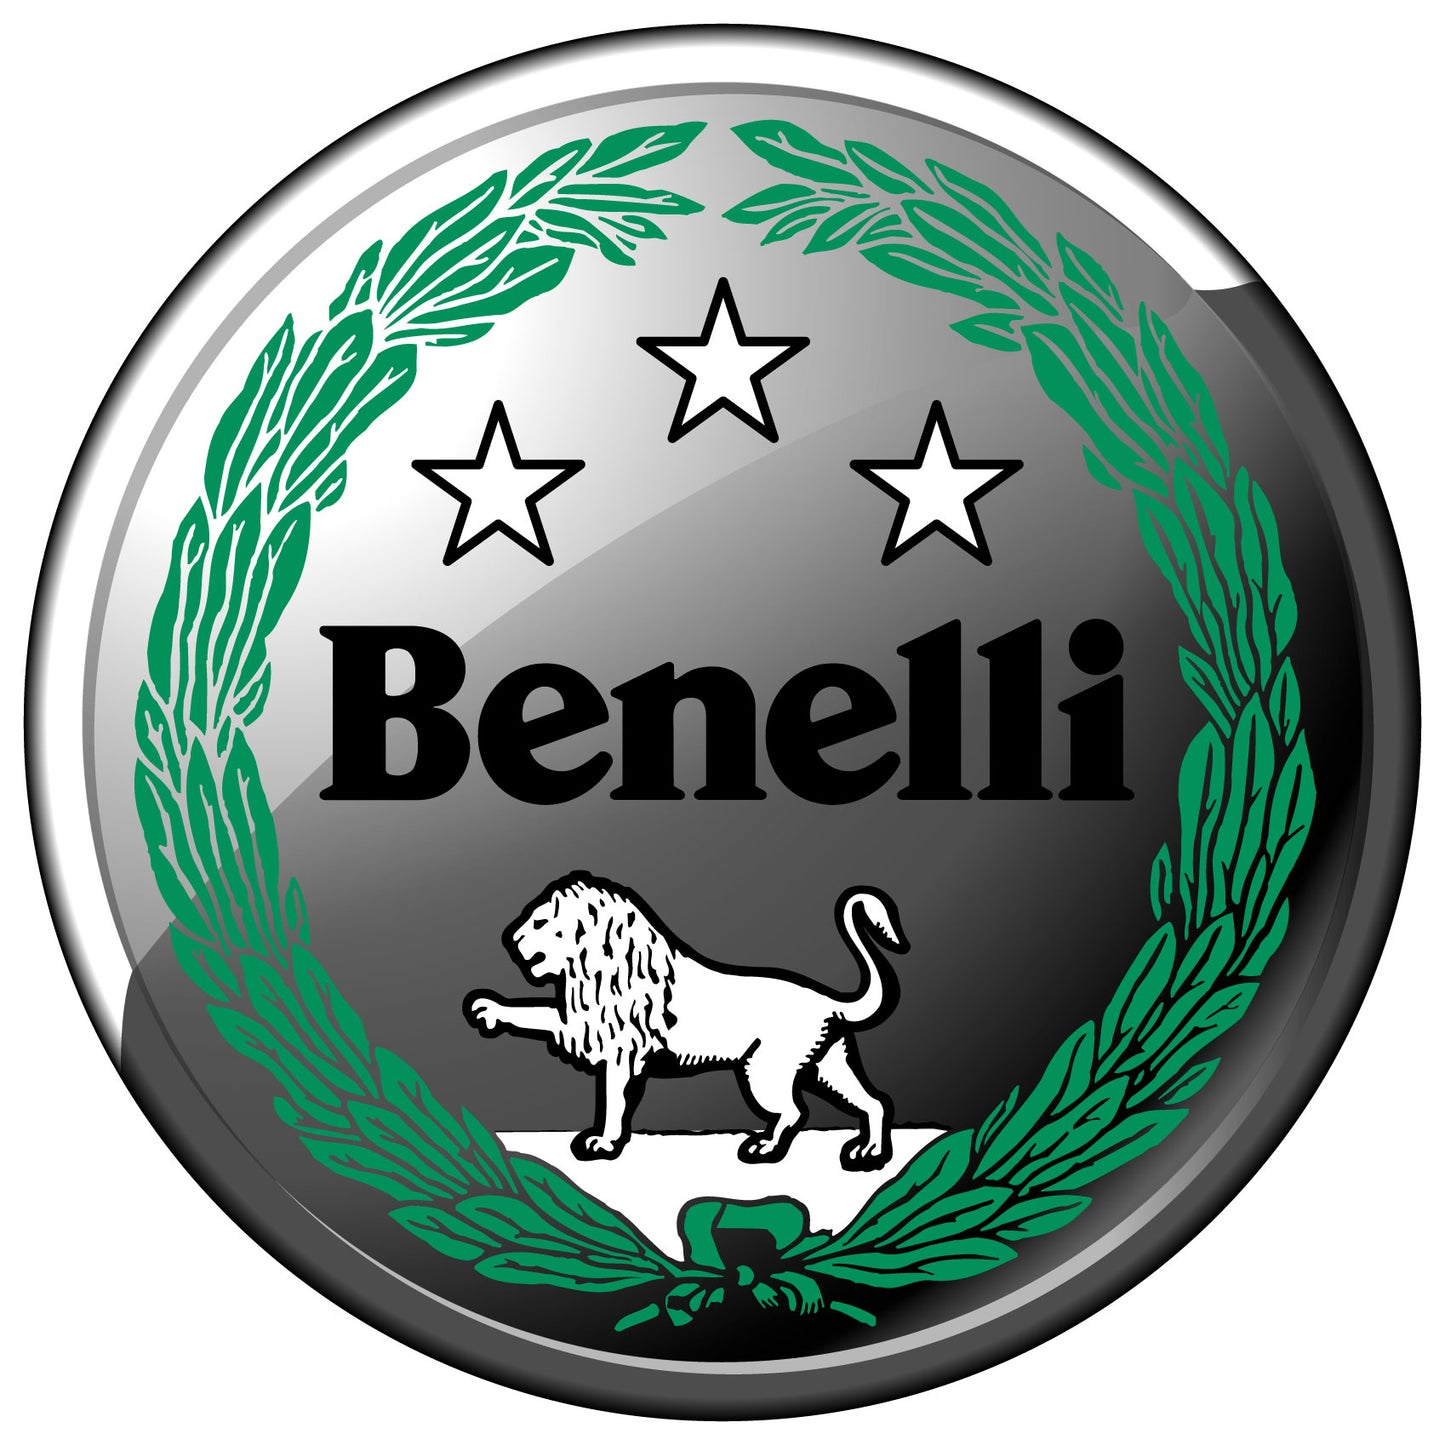 Benelli OEM Oil Filter TNT300 302S TRK502 600 Leoncino 260146090010